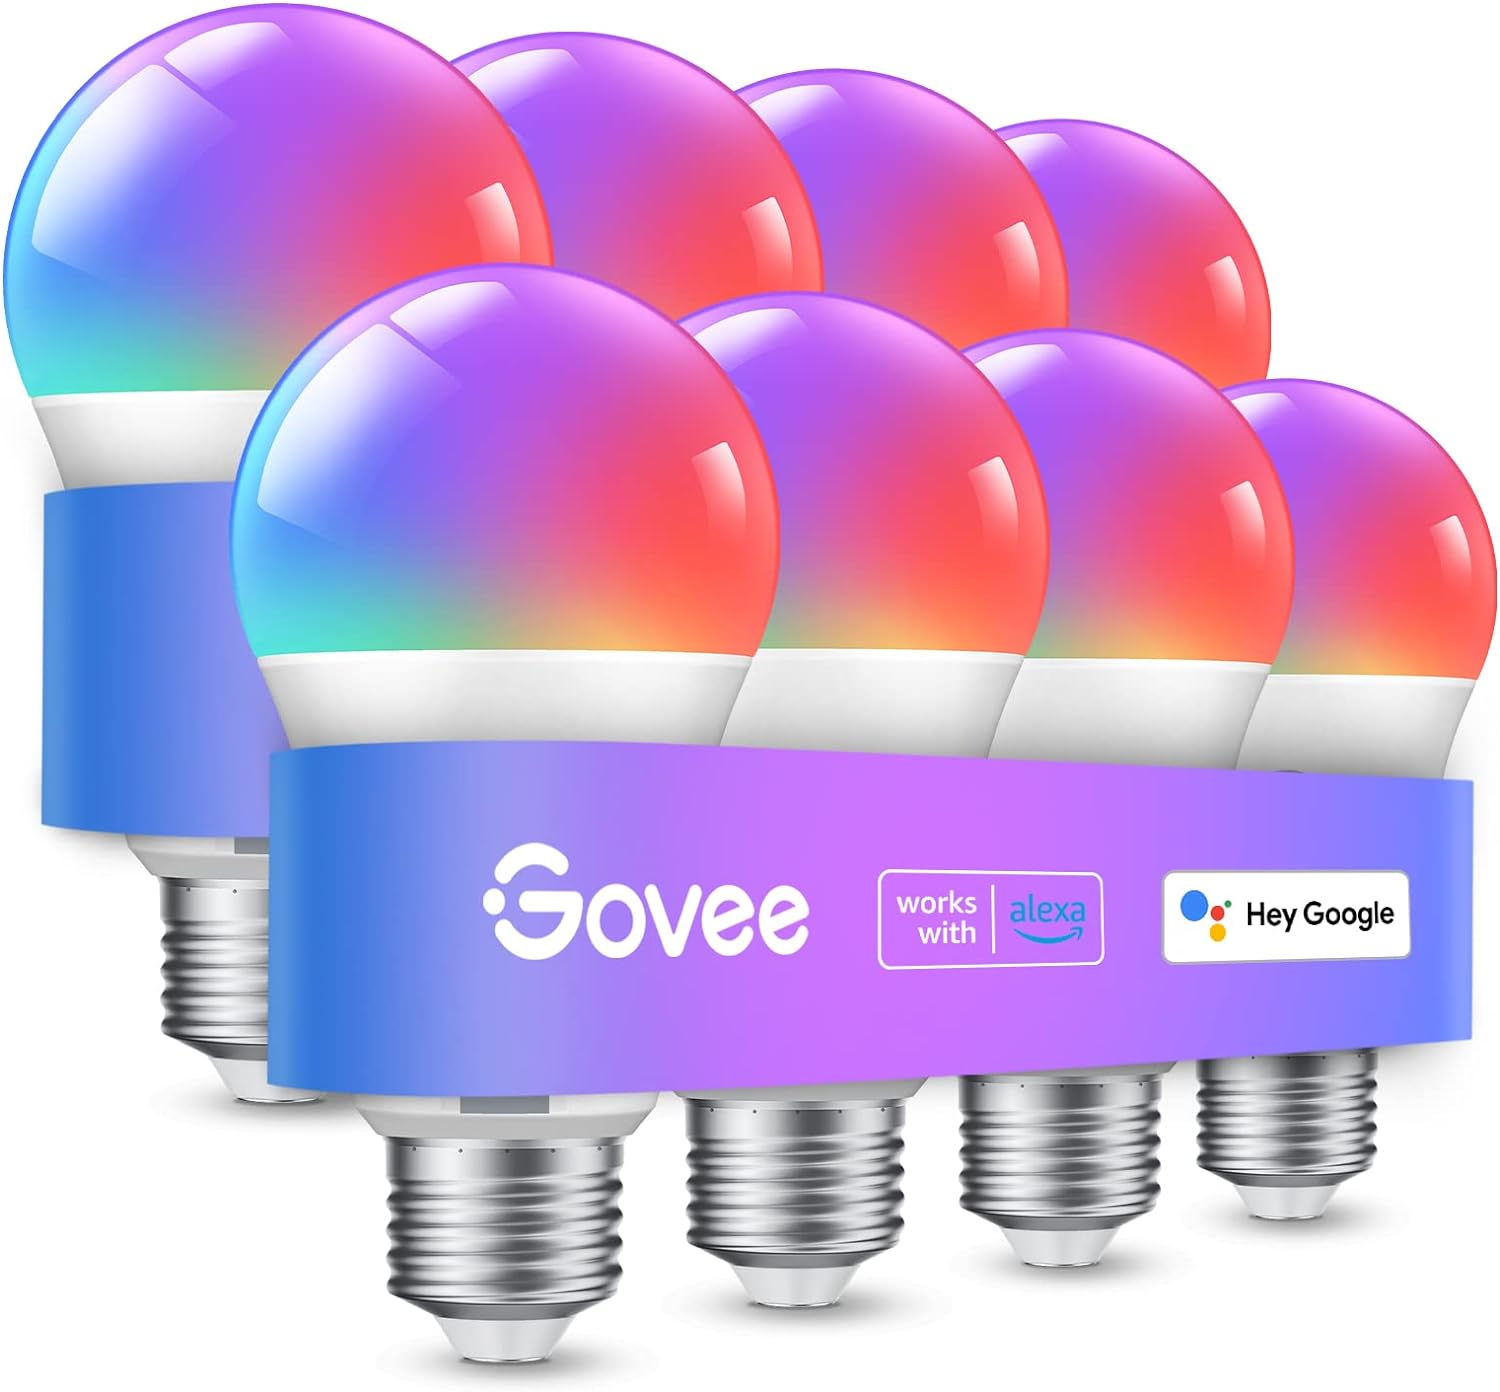 Govee Smart Light Bulbs, WiFi Bluetooth Color Changing Light Bulbs, Music Sync, 54 Dynamic Scenes, 16 Million DIY Colors RGB Light Bulbs, Work with Alexa, Google Assistant Home App, 8 Pack